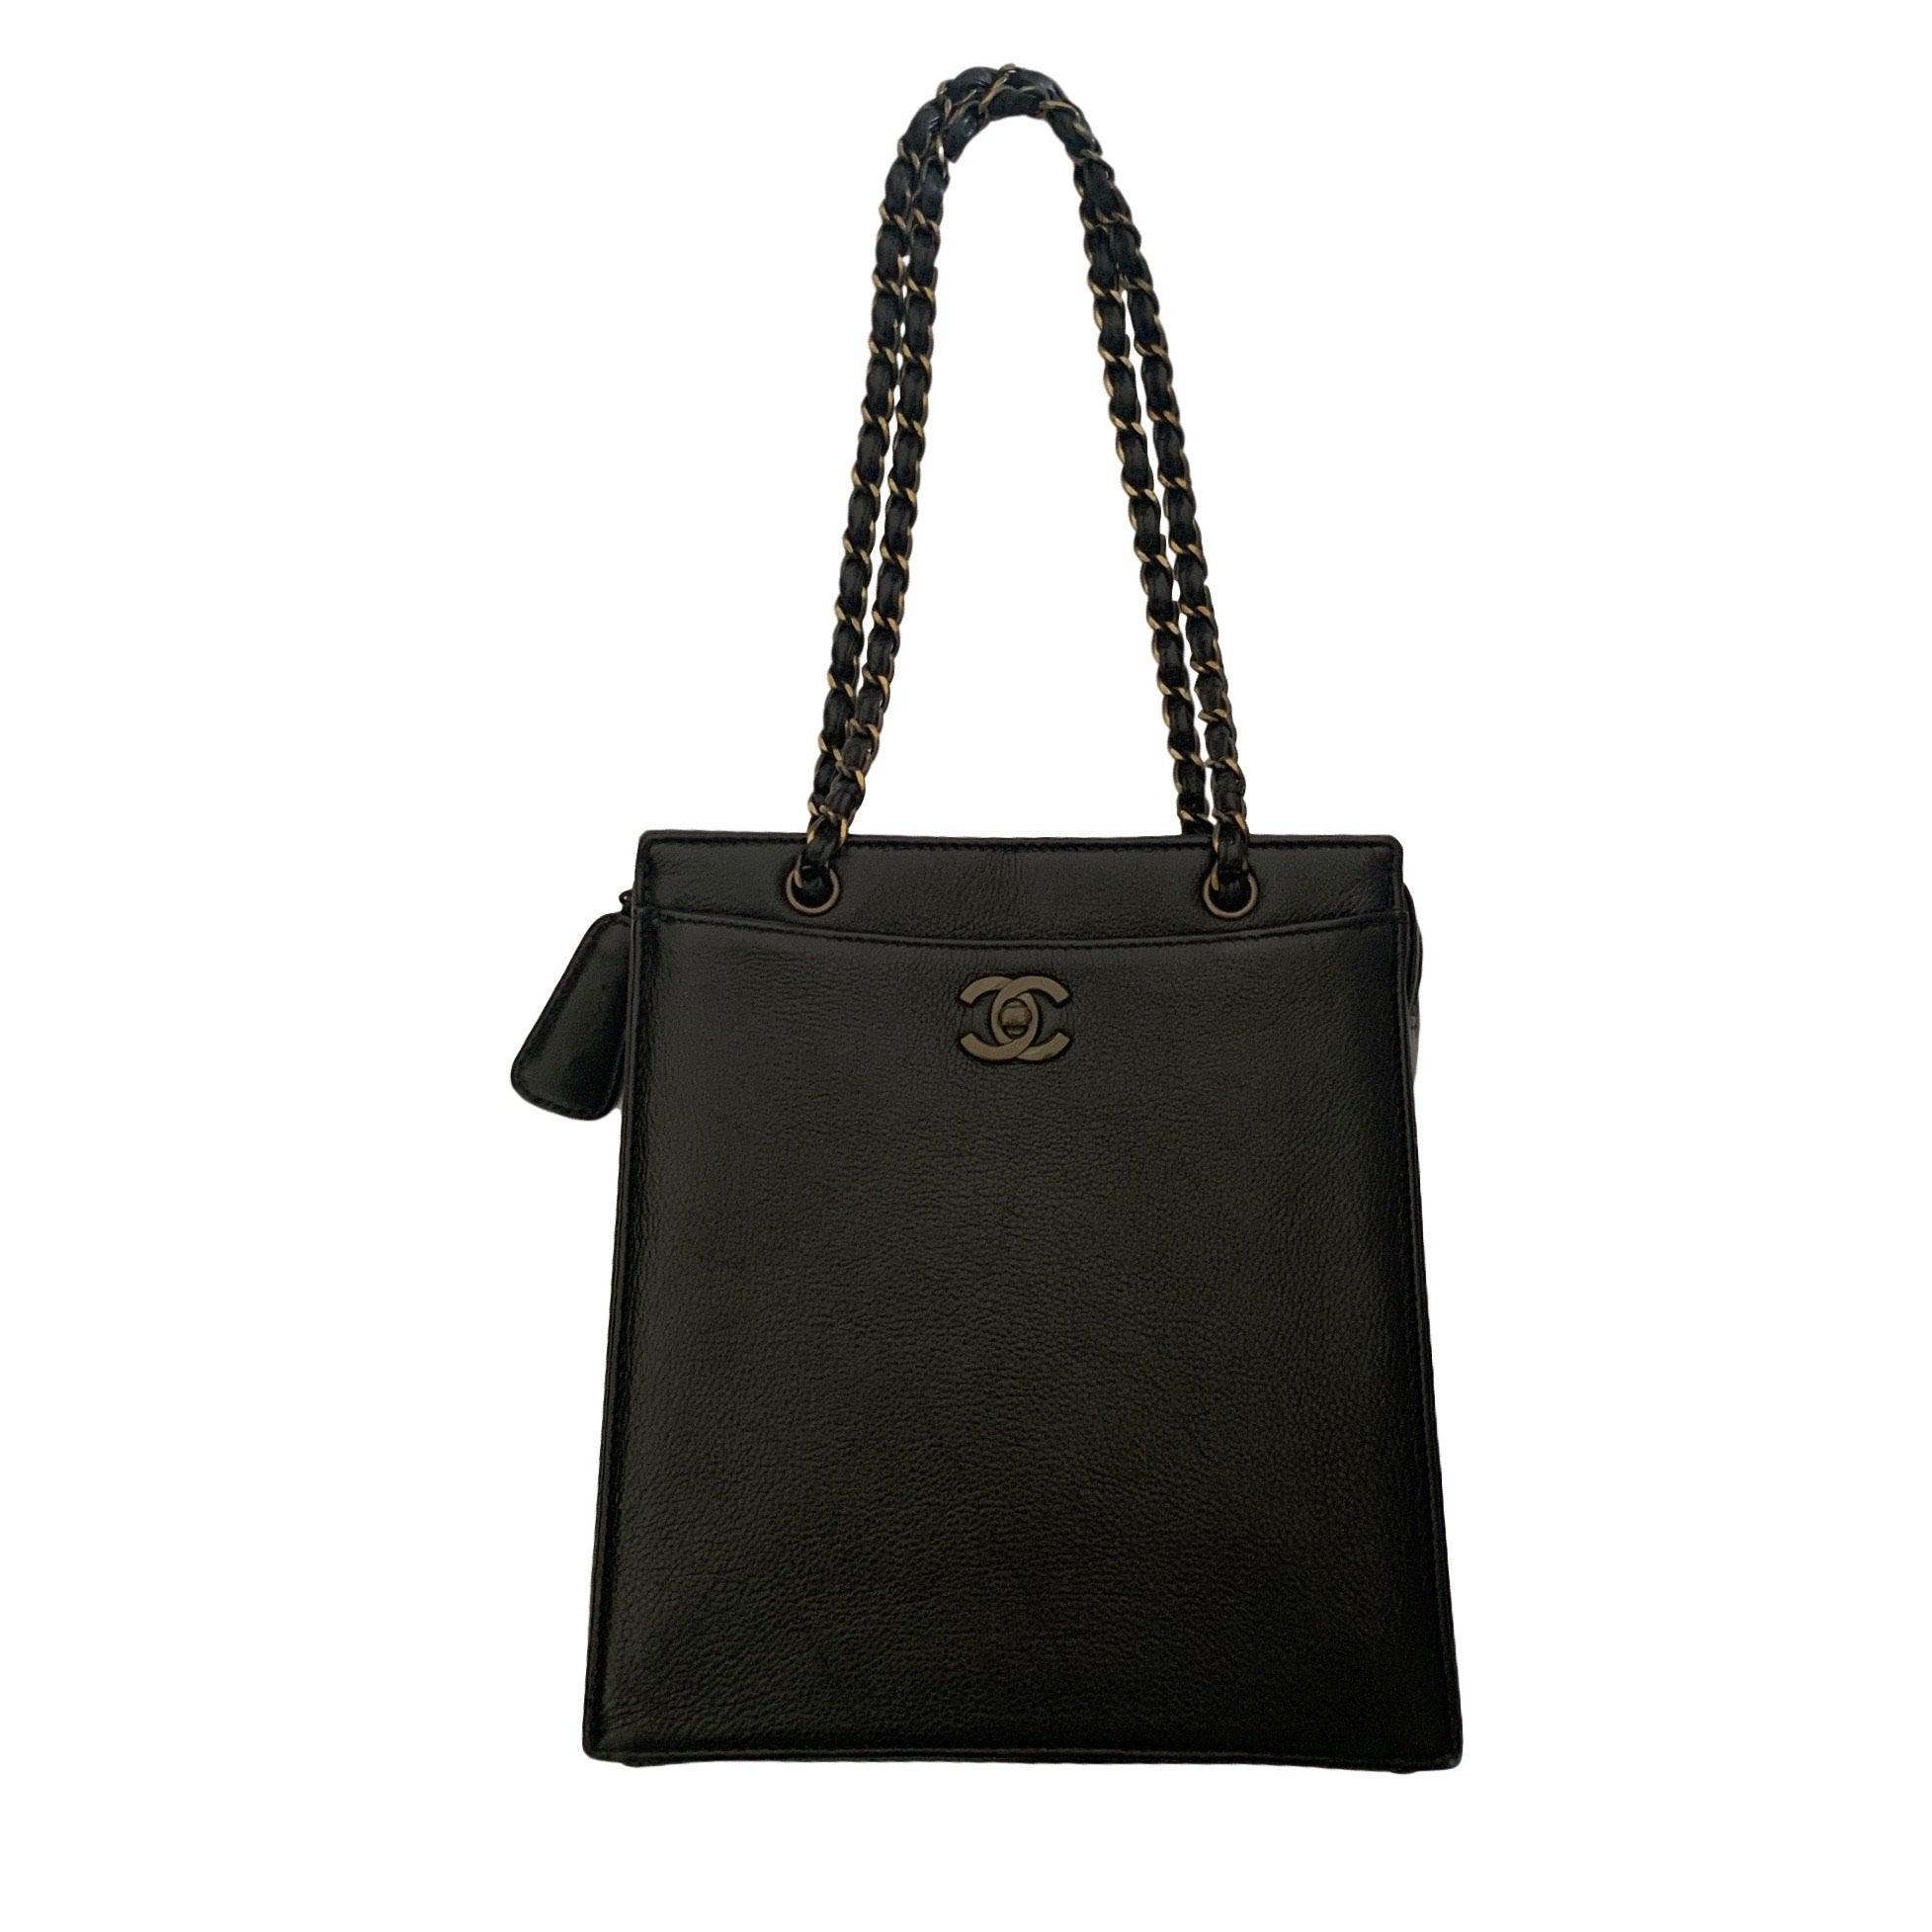 Chanel Black Small Caviar Chain Bag - Handbags